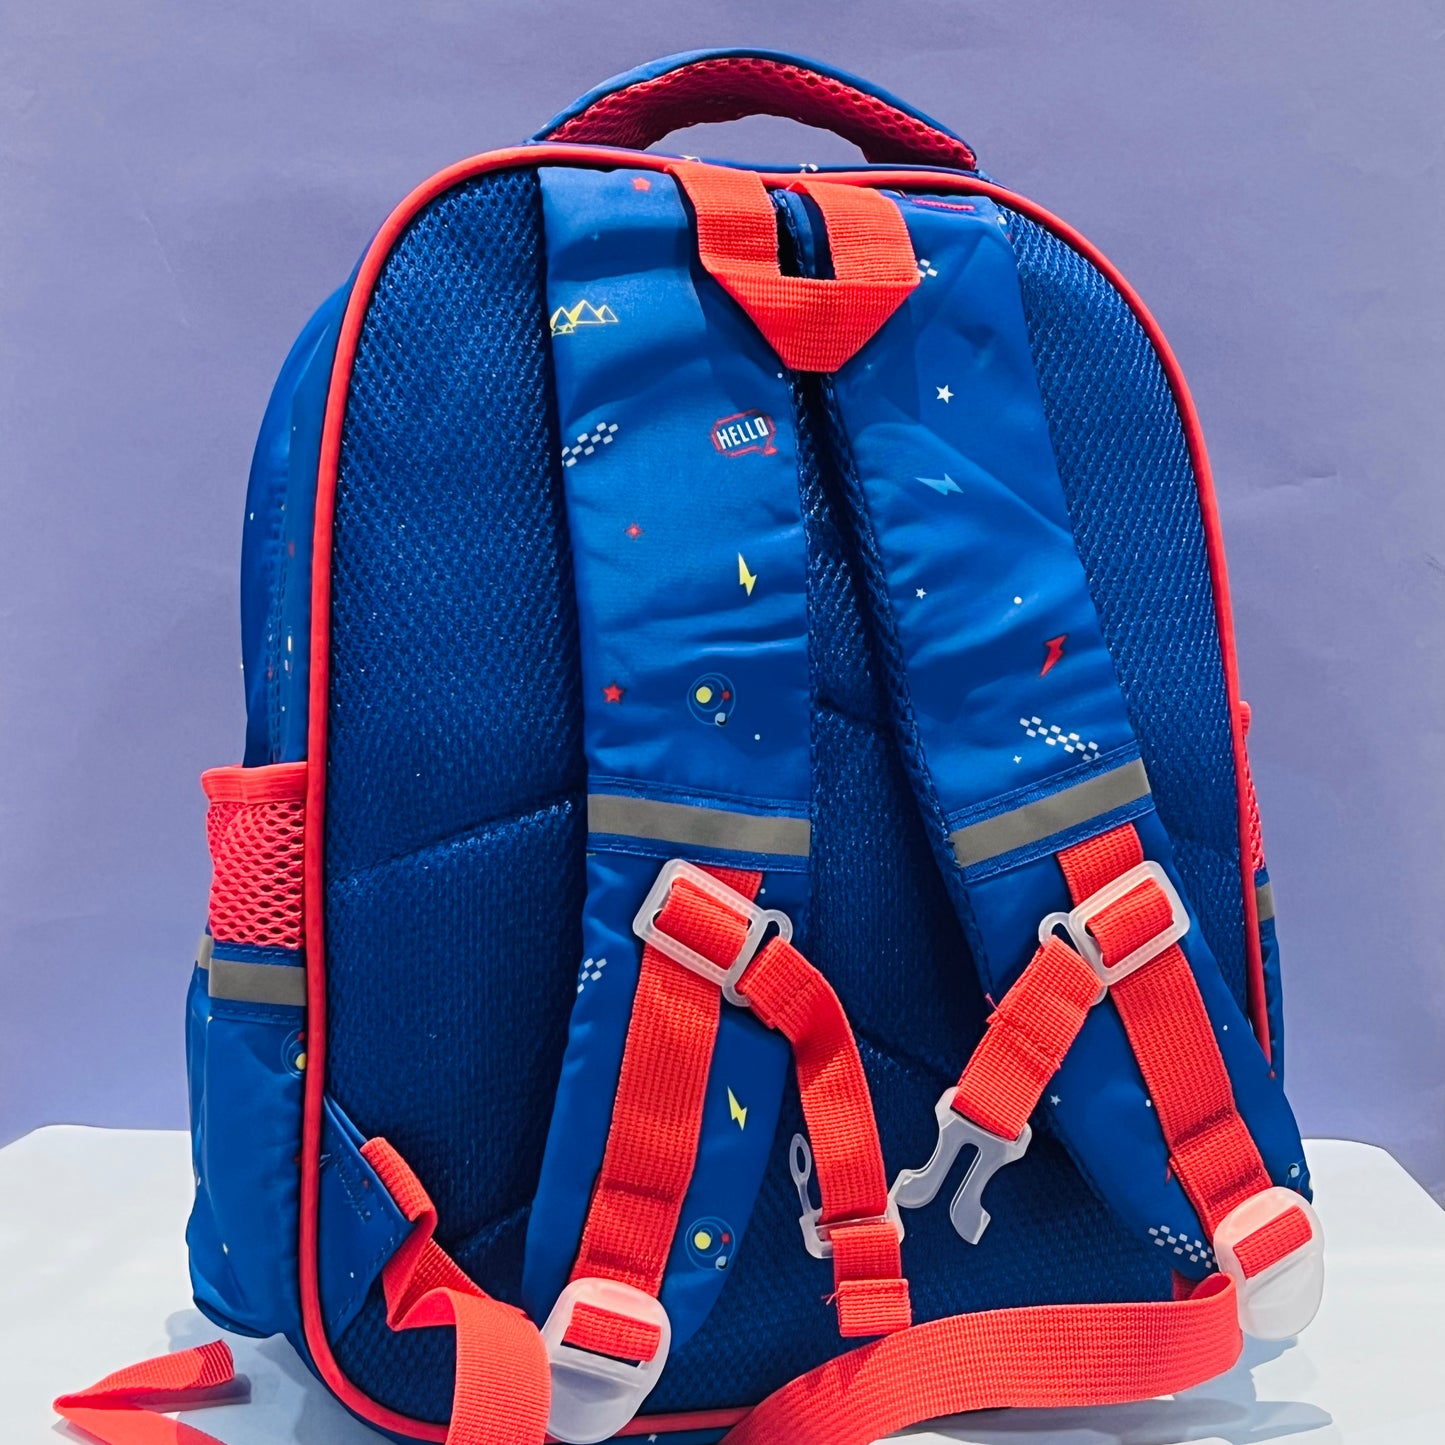 Study Companion - 13” 3D School bags with Air Cushion